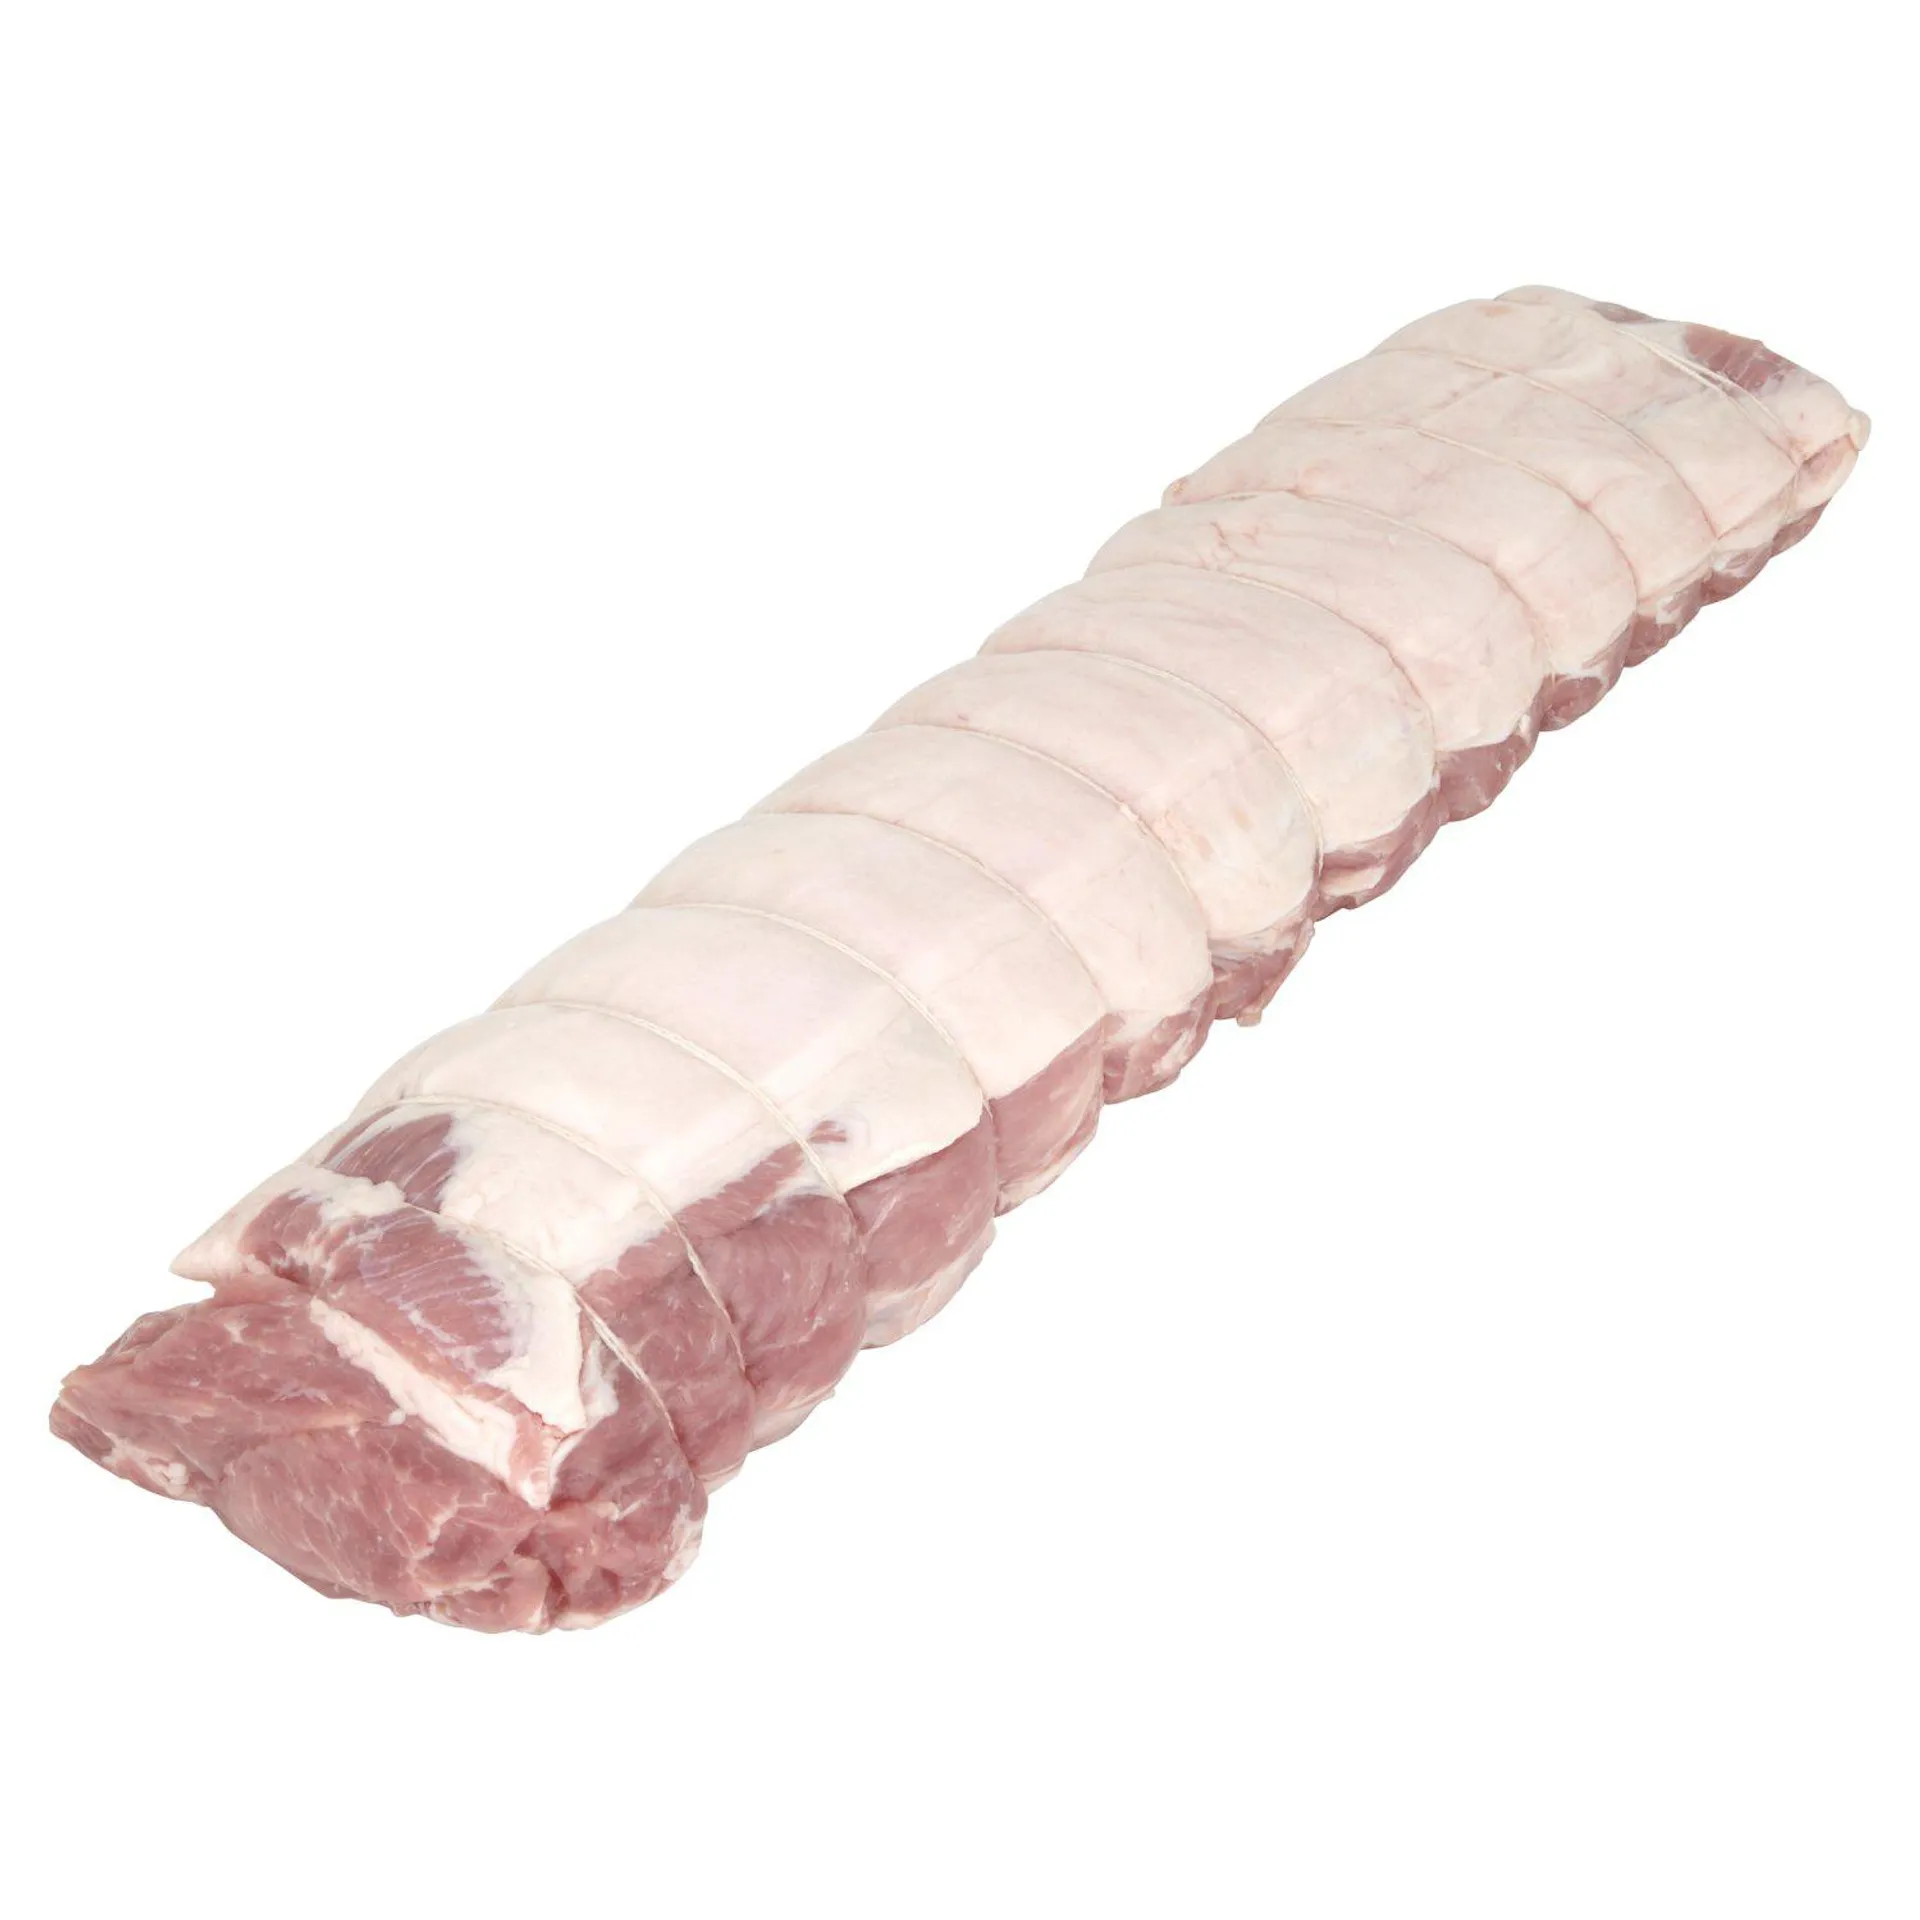 SuperValu Fresh Irish Pork Loin Roast (1 kg)